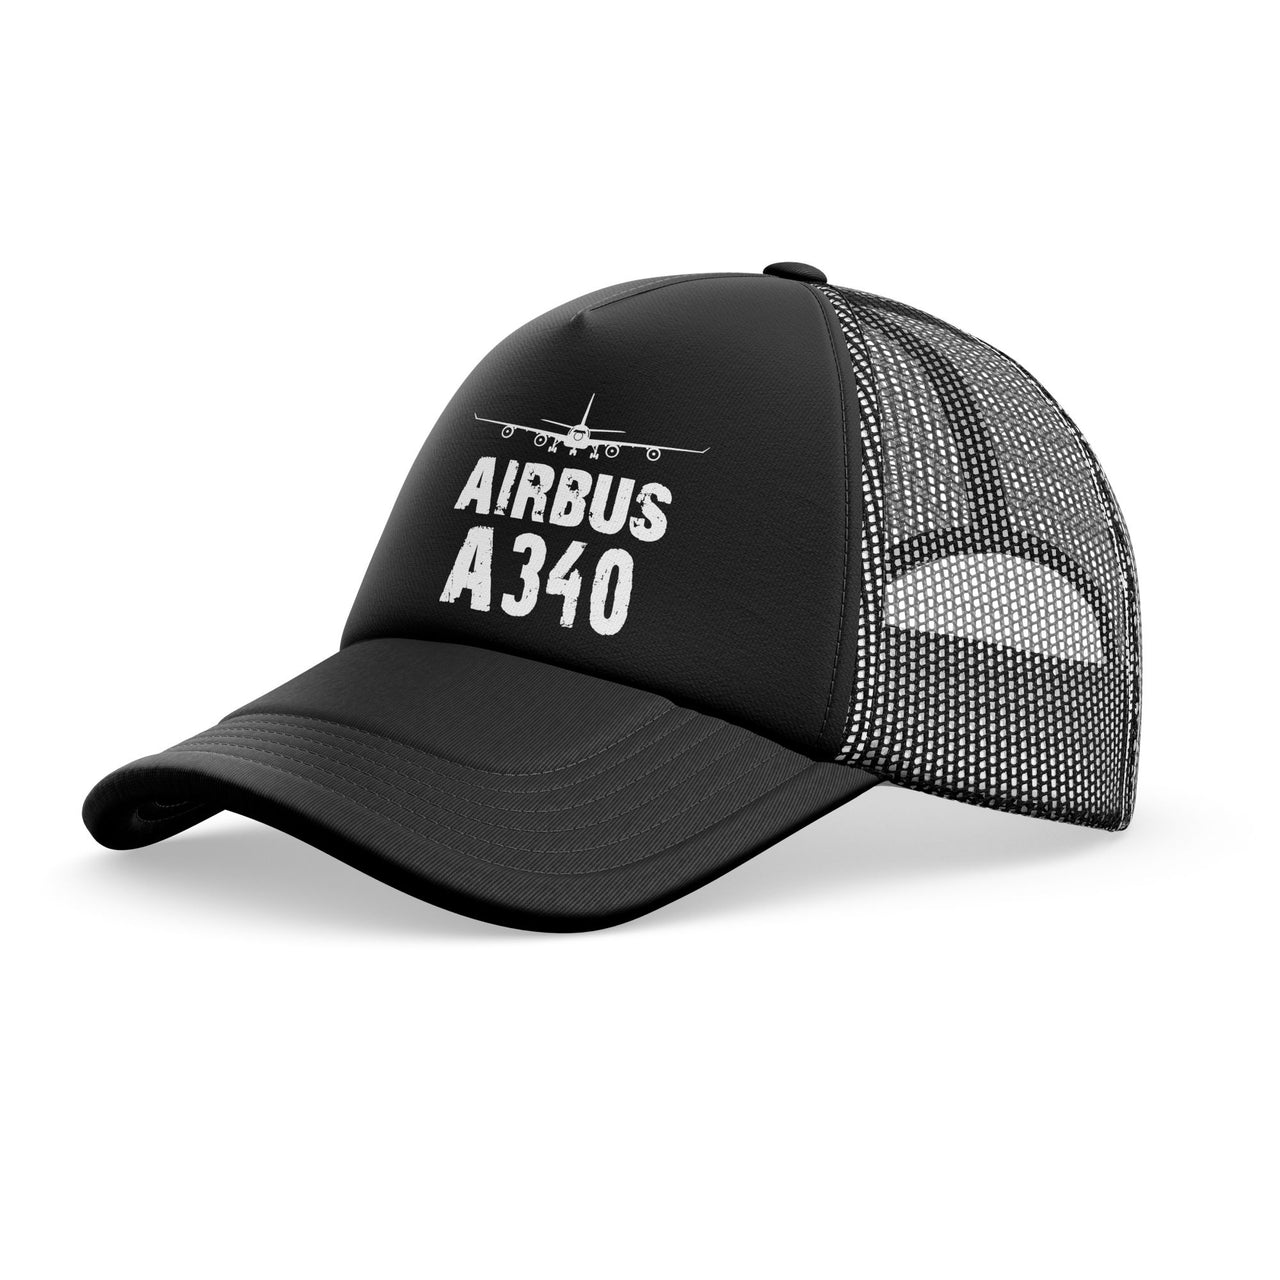 Airbus A340 & Plane Designed Trucker Caps & Hats